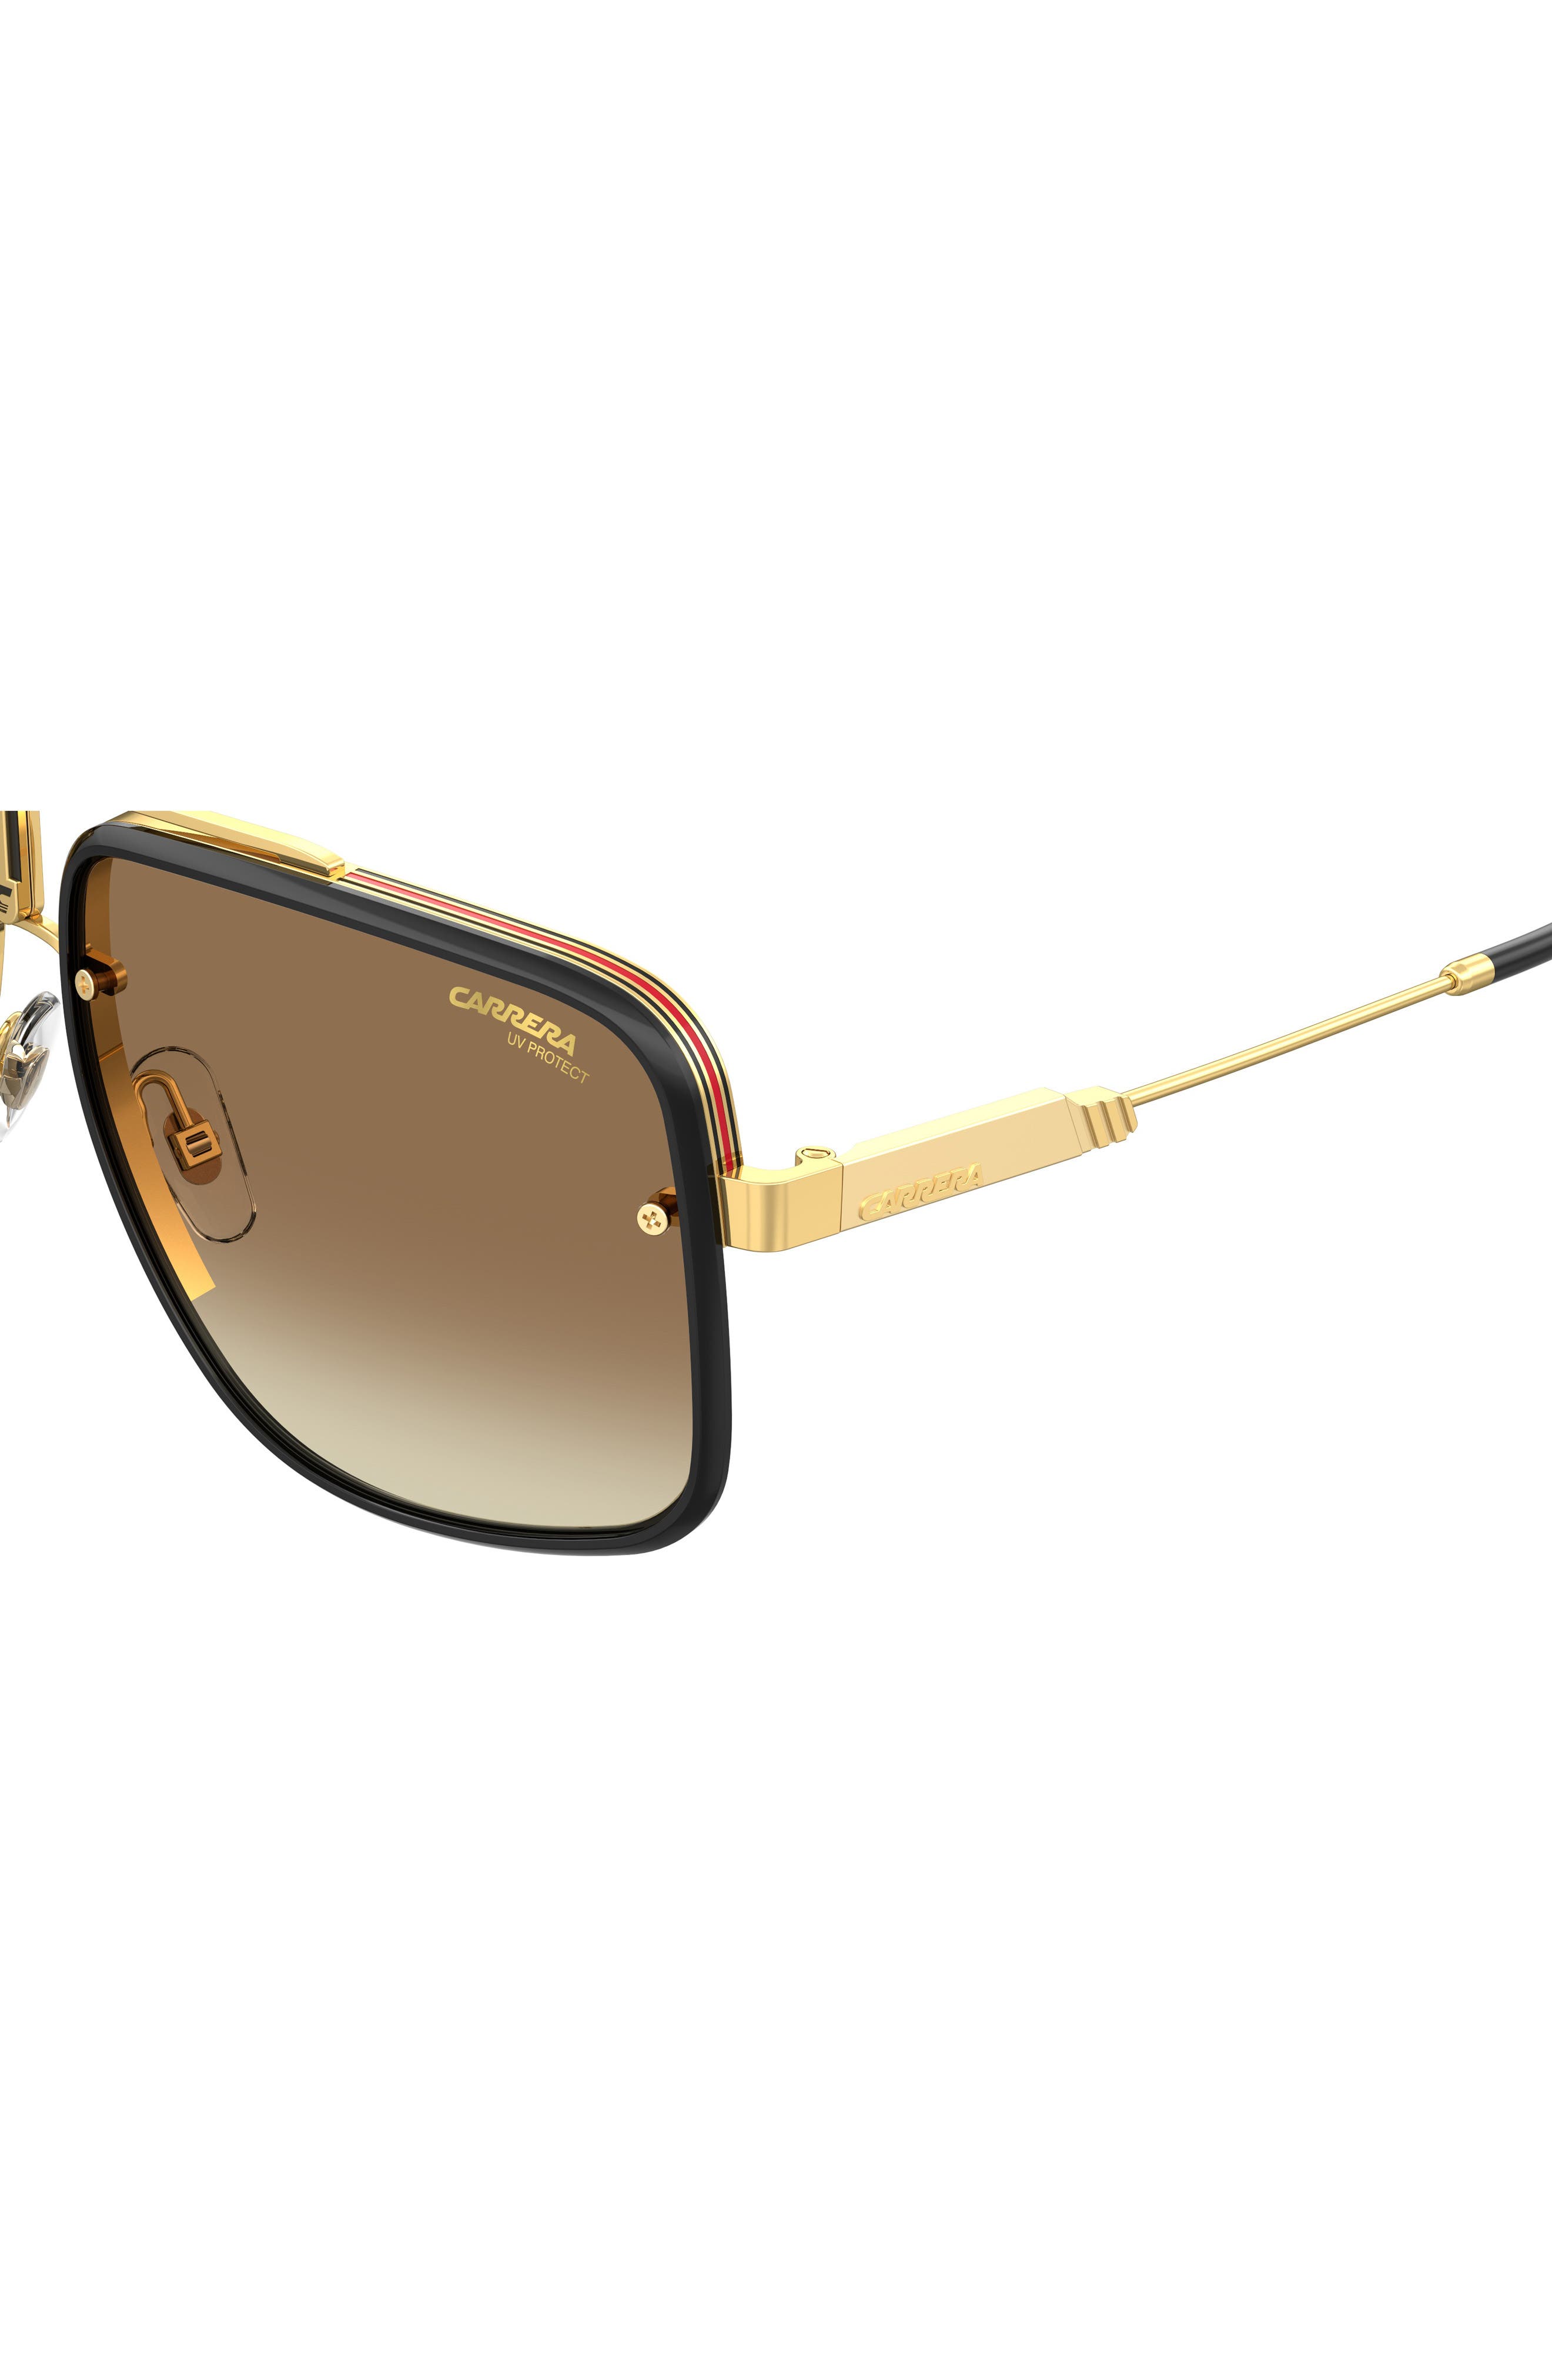 2019 New Fashion Aviator Men's & Women's Sunglasses Unisex Carrera Glasses C-18 